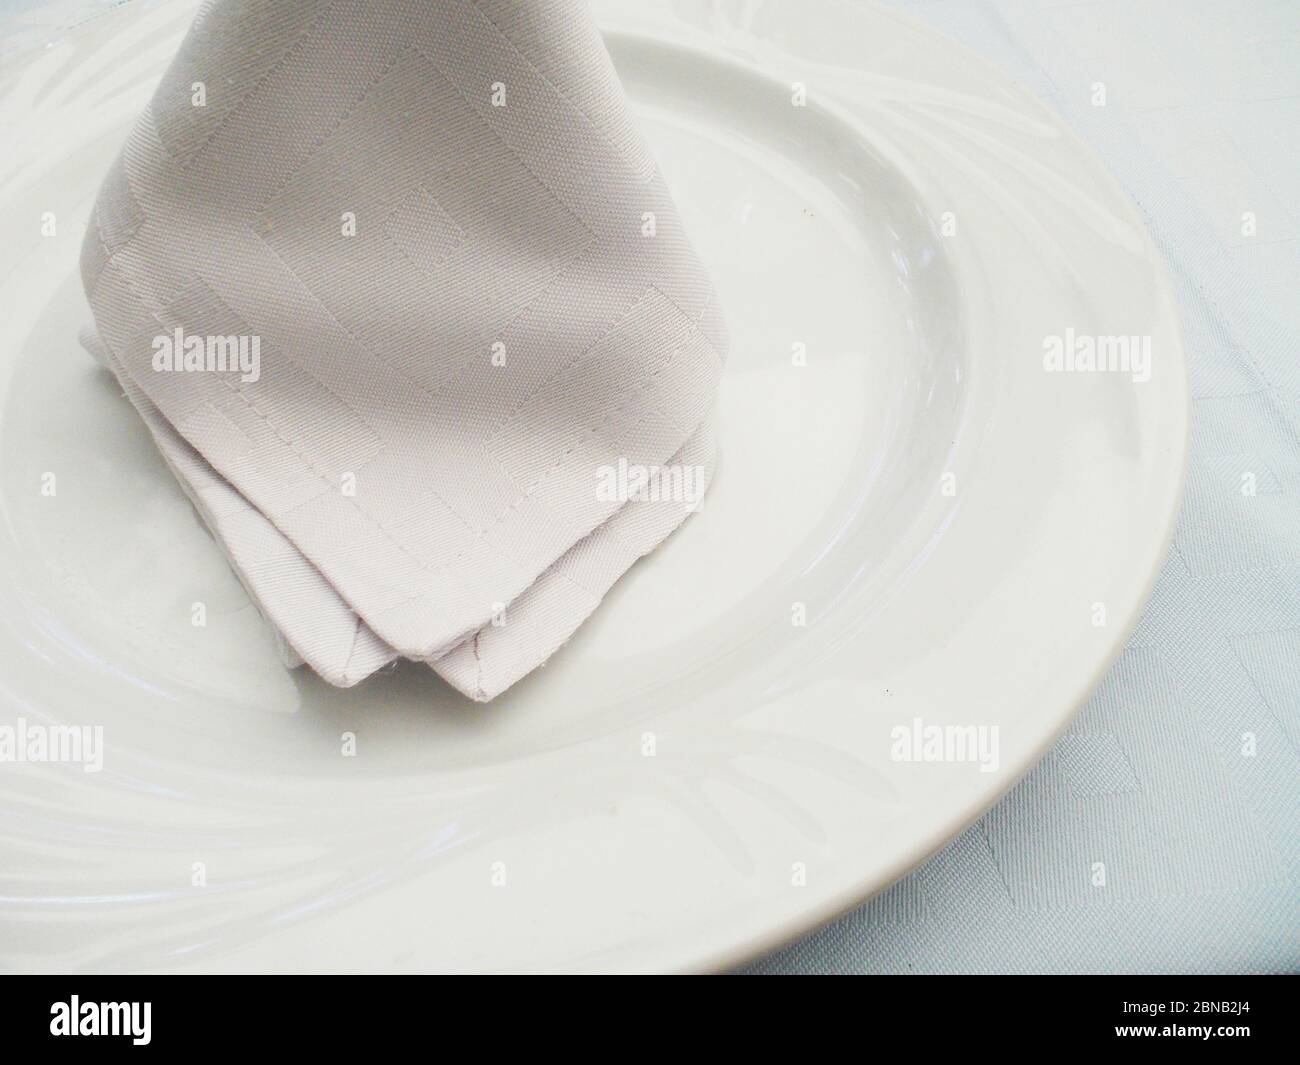 Napkin on empty plate. Stock Photo